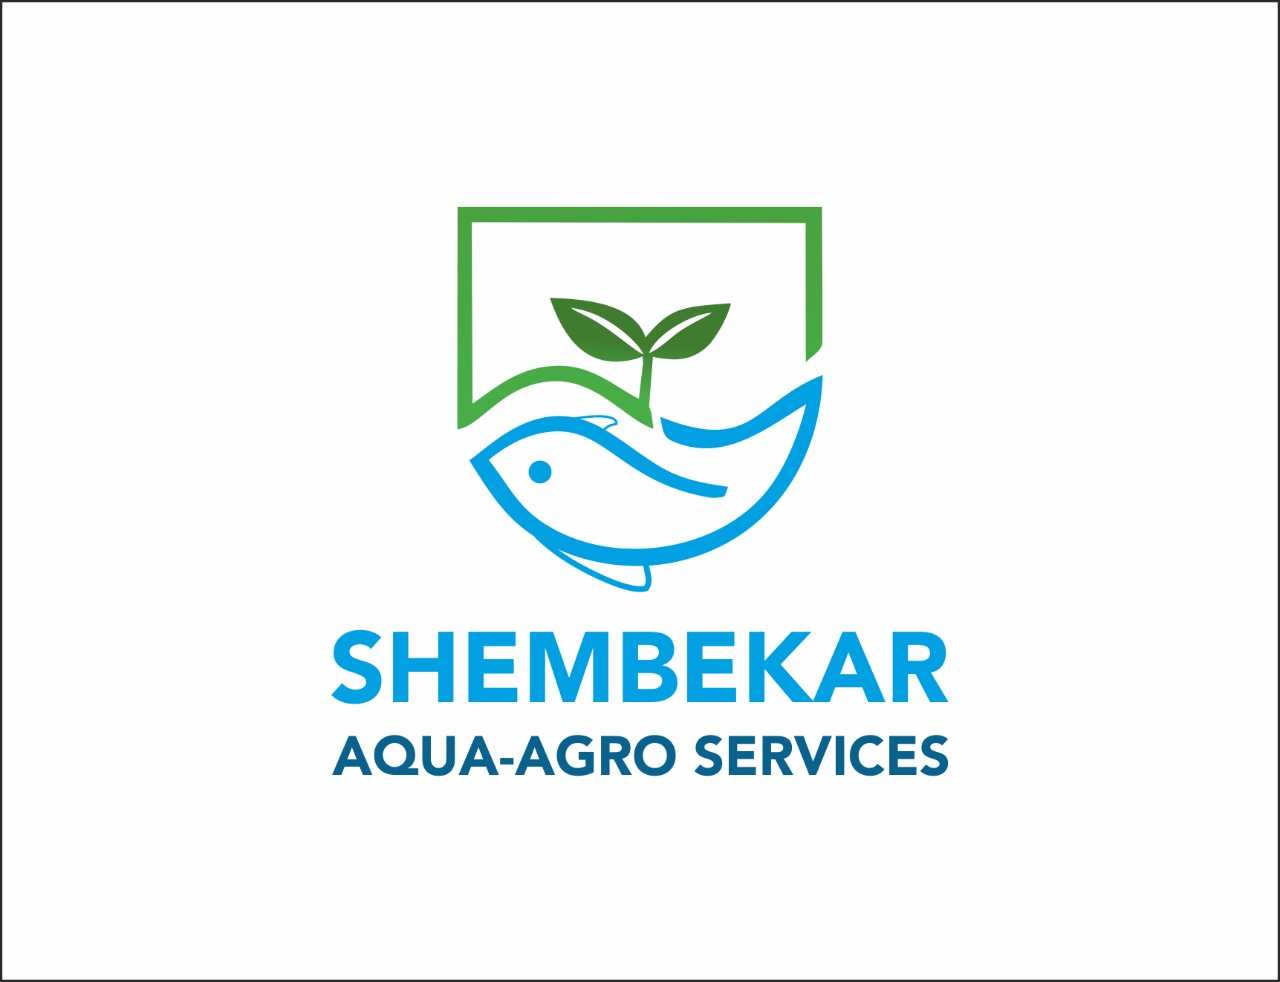 Vishwas Shembekar, Director at Shembekar Aqua-Agro Services